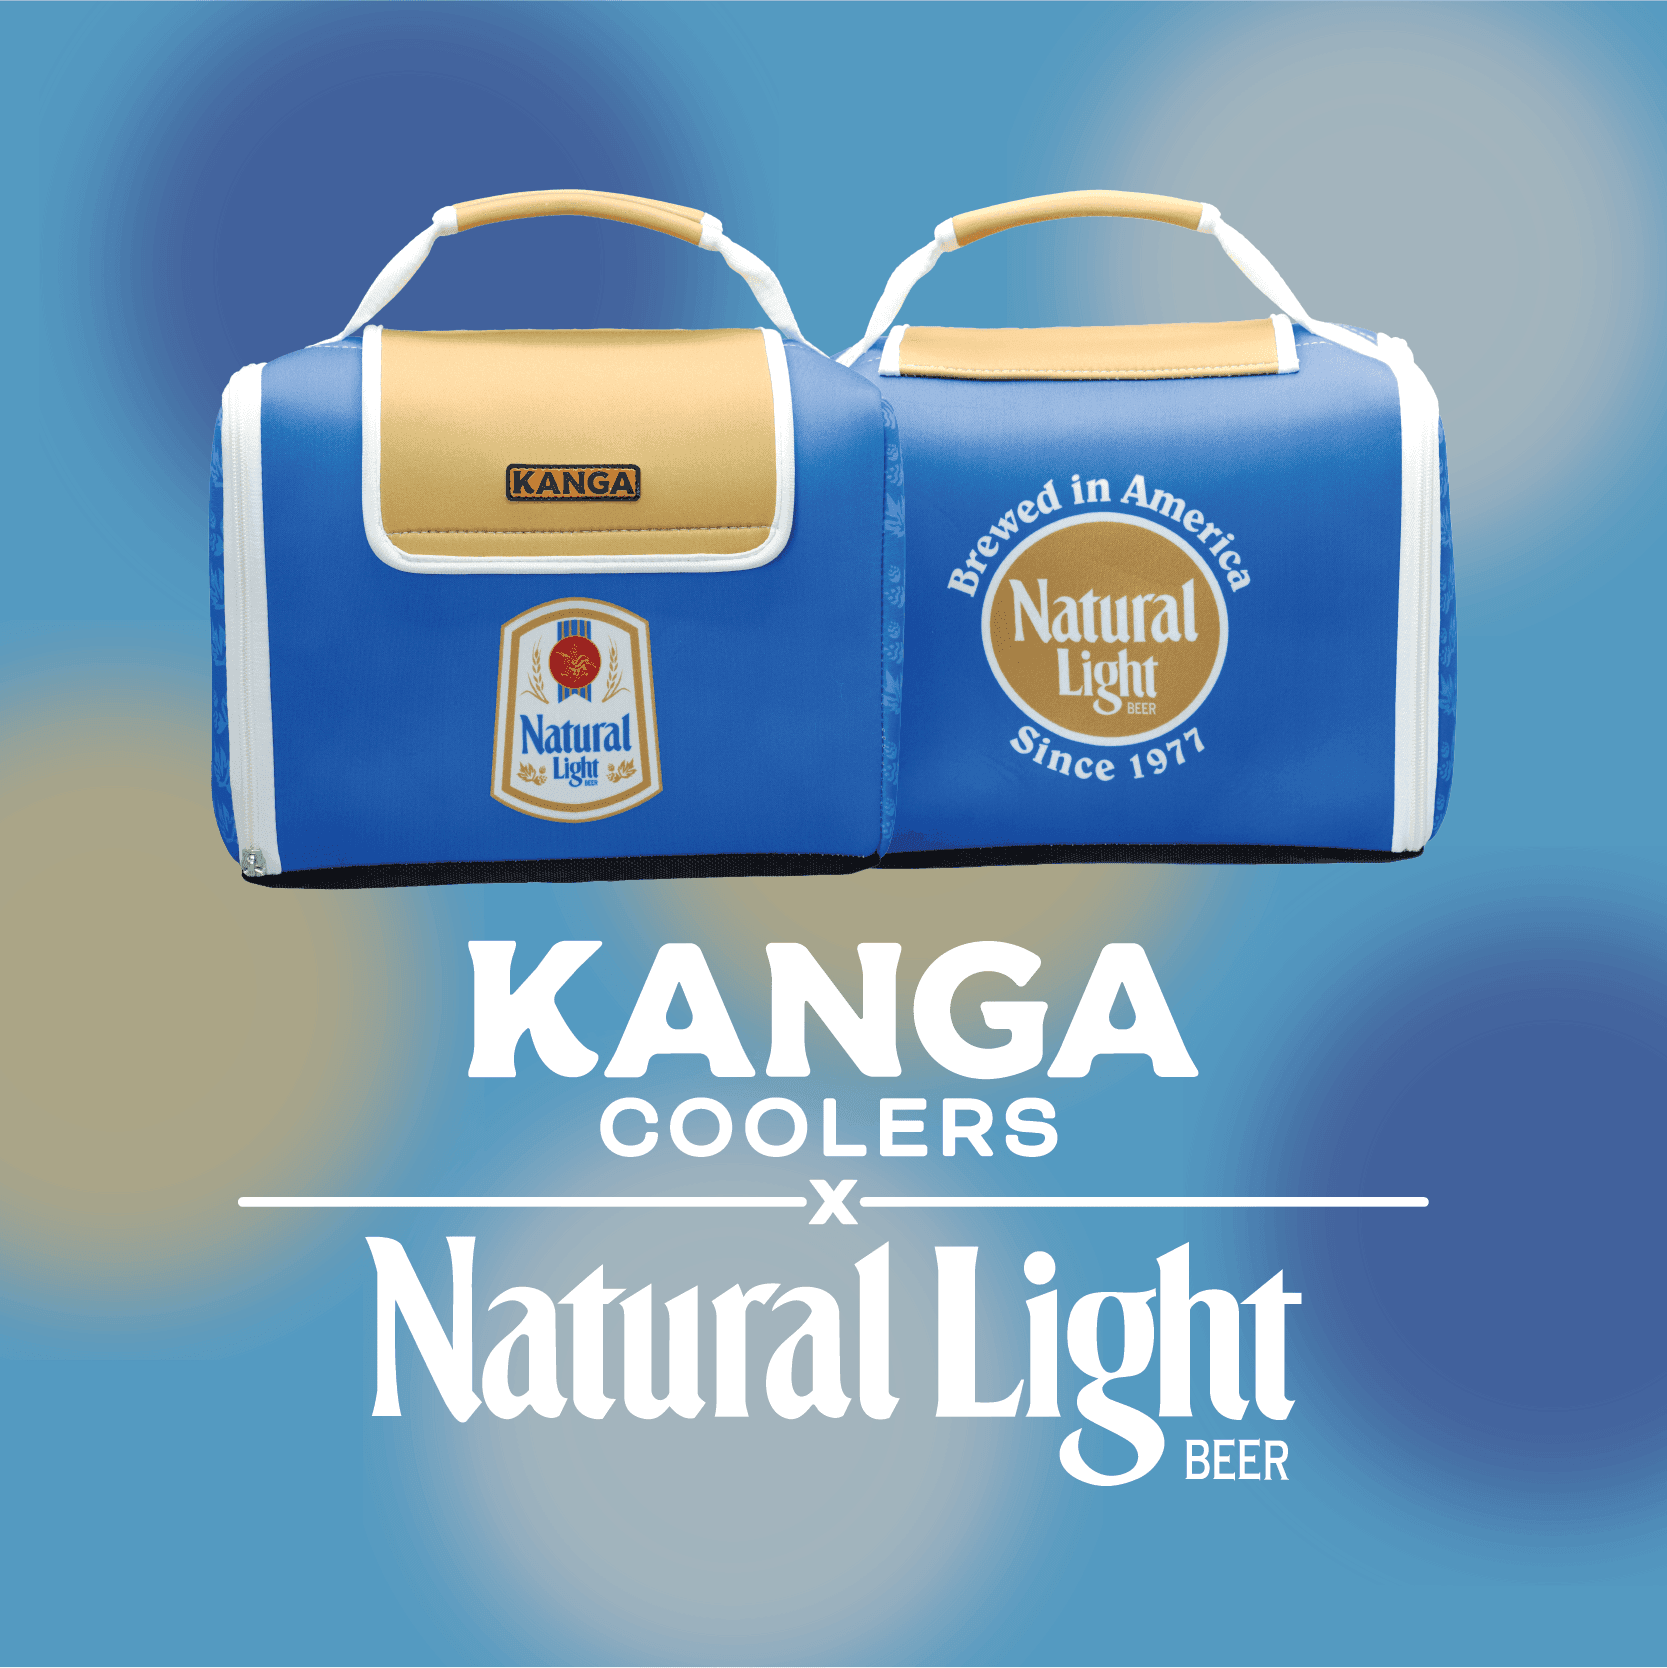 Kanga Coolers x Natural Light Beer collab image